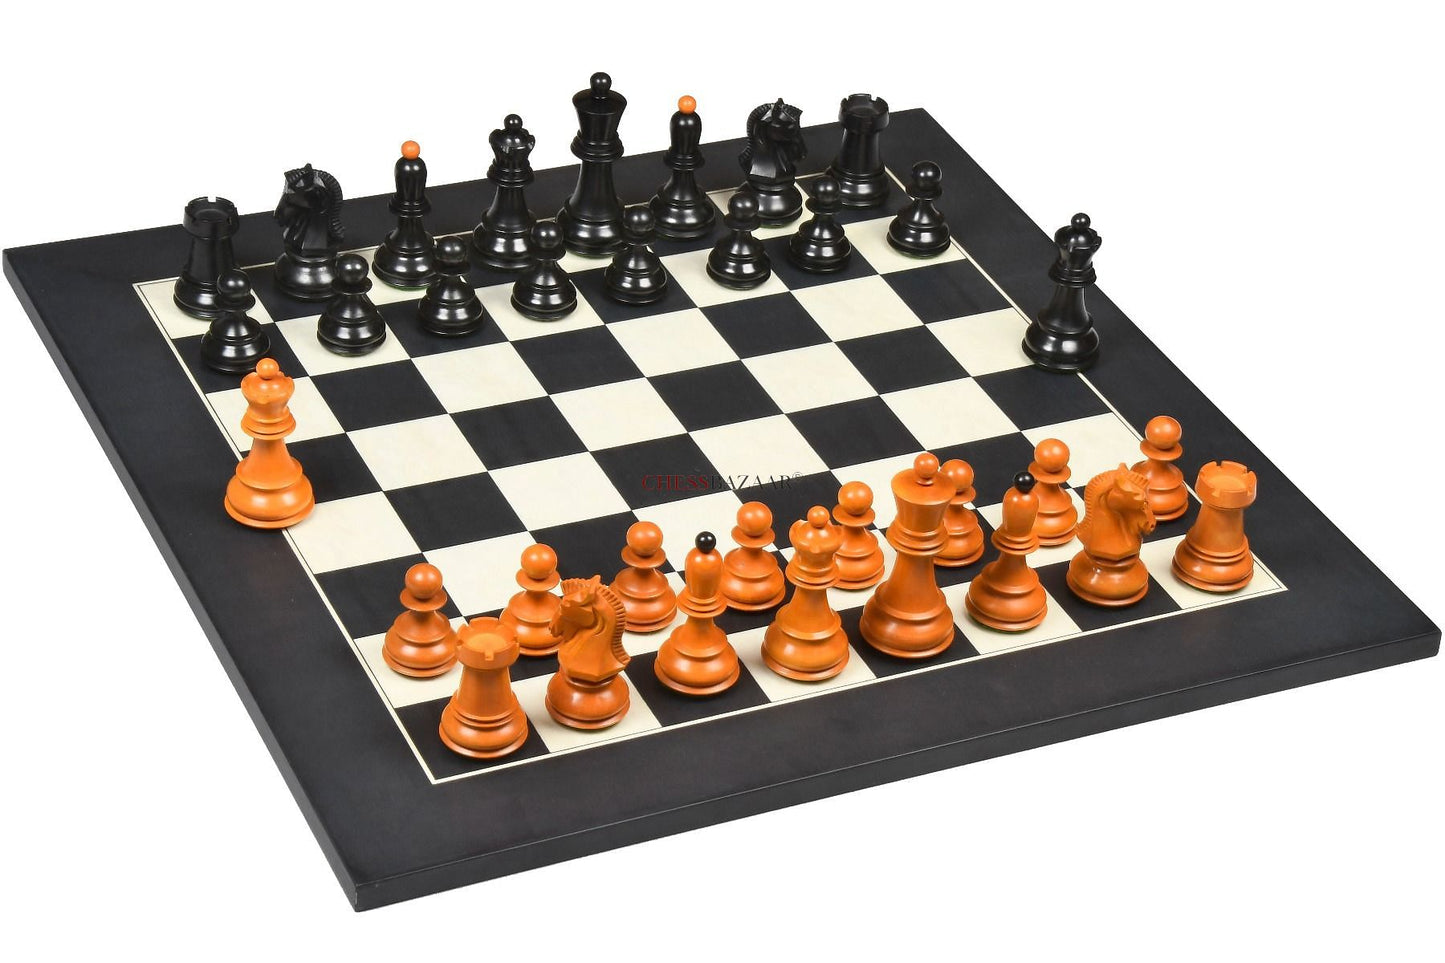 Reproduced Dubrovnik chessmen from chessbazaarindia